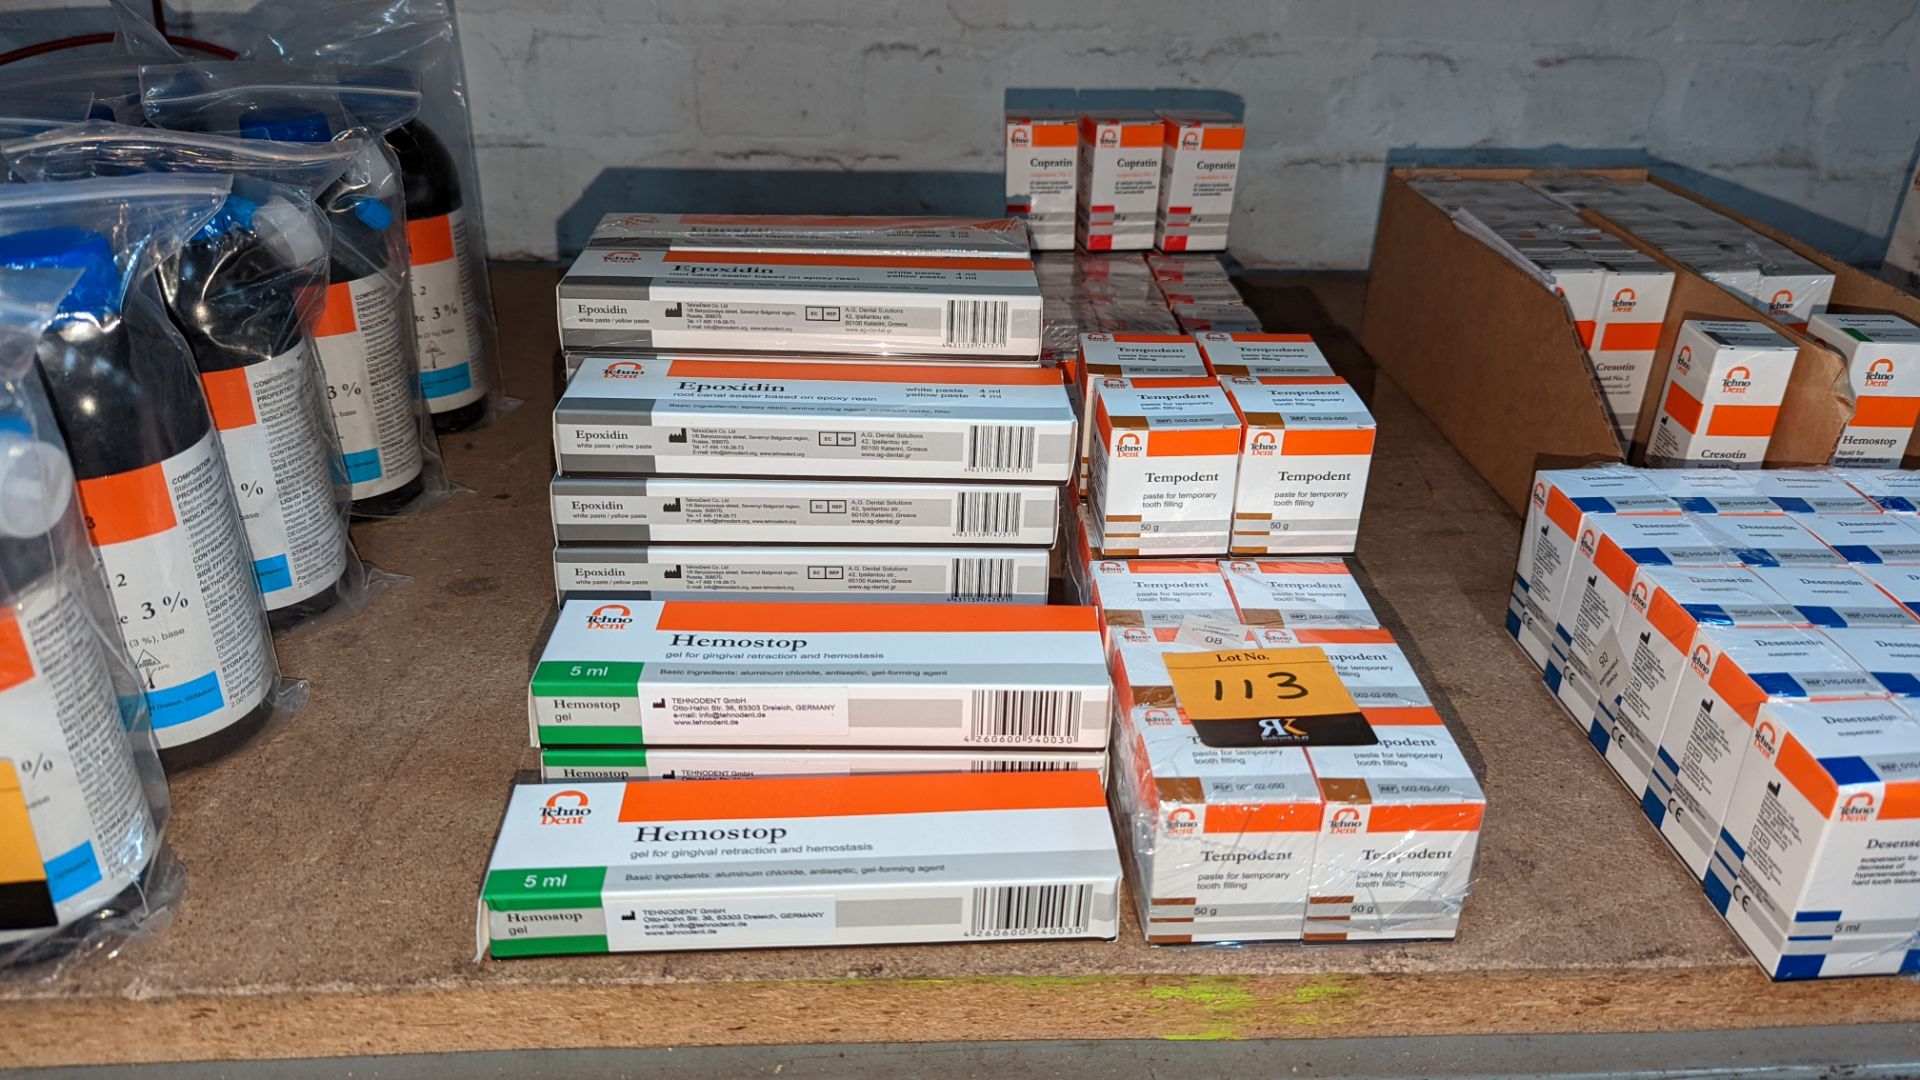 Quantity of Tempodent, Cupratin, Hemostop & Epoxidin product - 49 boxes in total